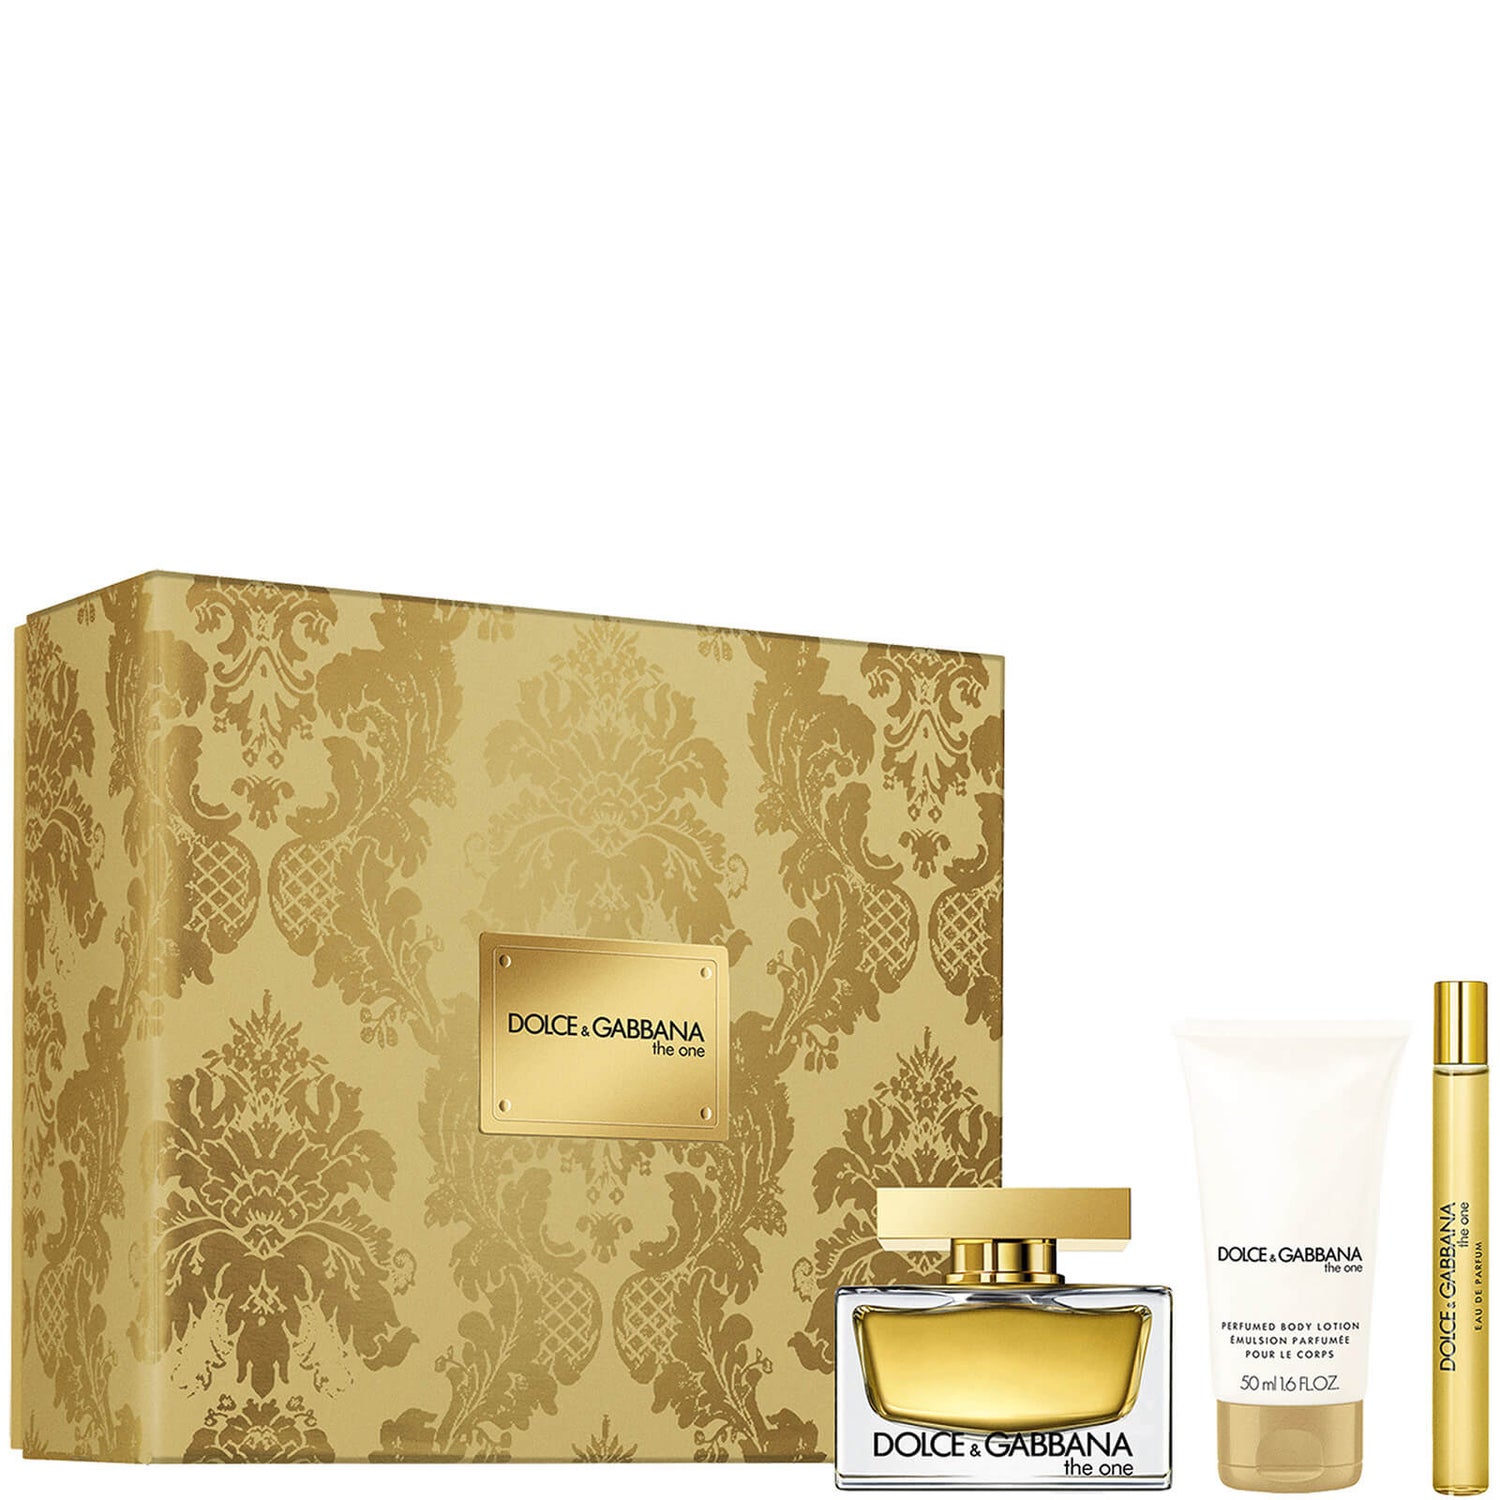 Conjunto Dolce&Gabbana The One Eau de Parfum - 75ml